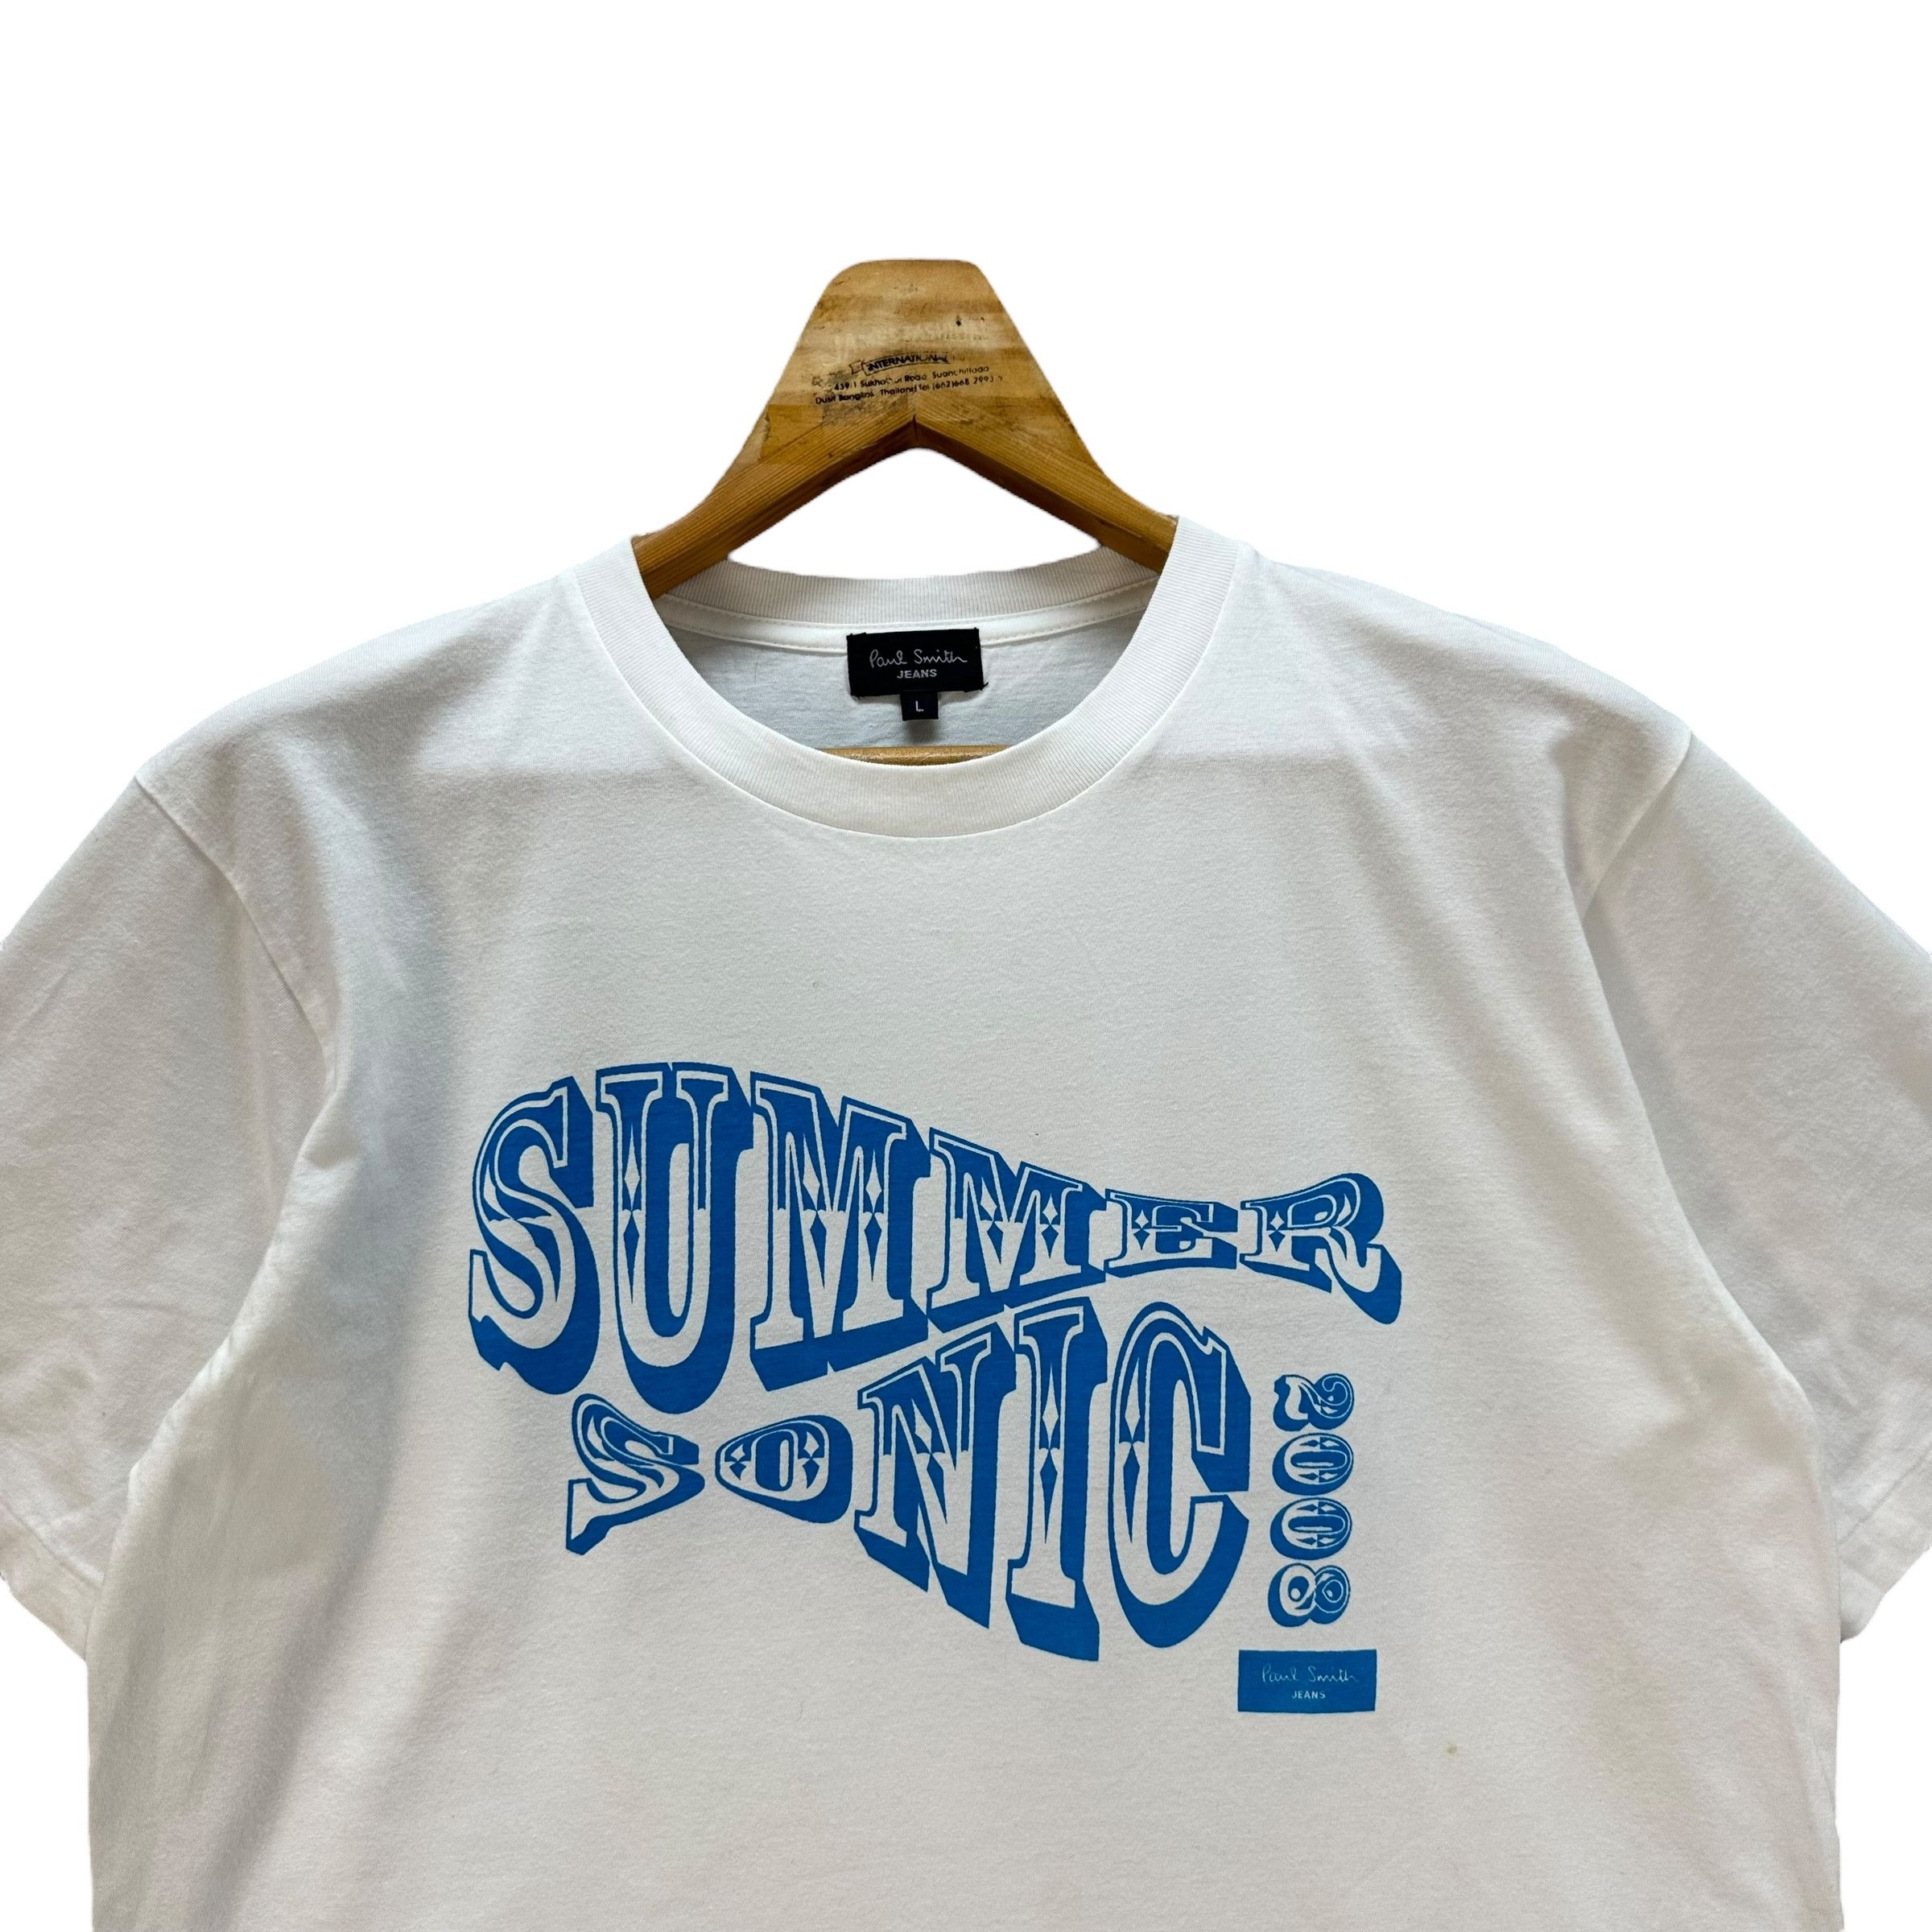 PAUL SMITH SUMMER SONIC SOUND 2008 TEES #9098-56 - 2